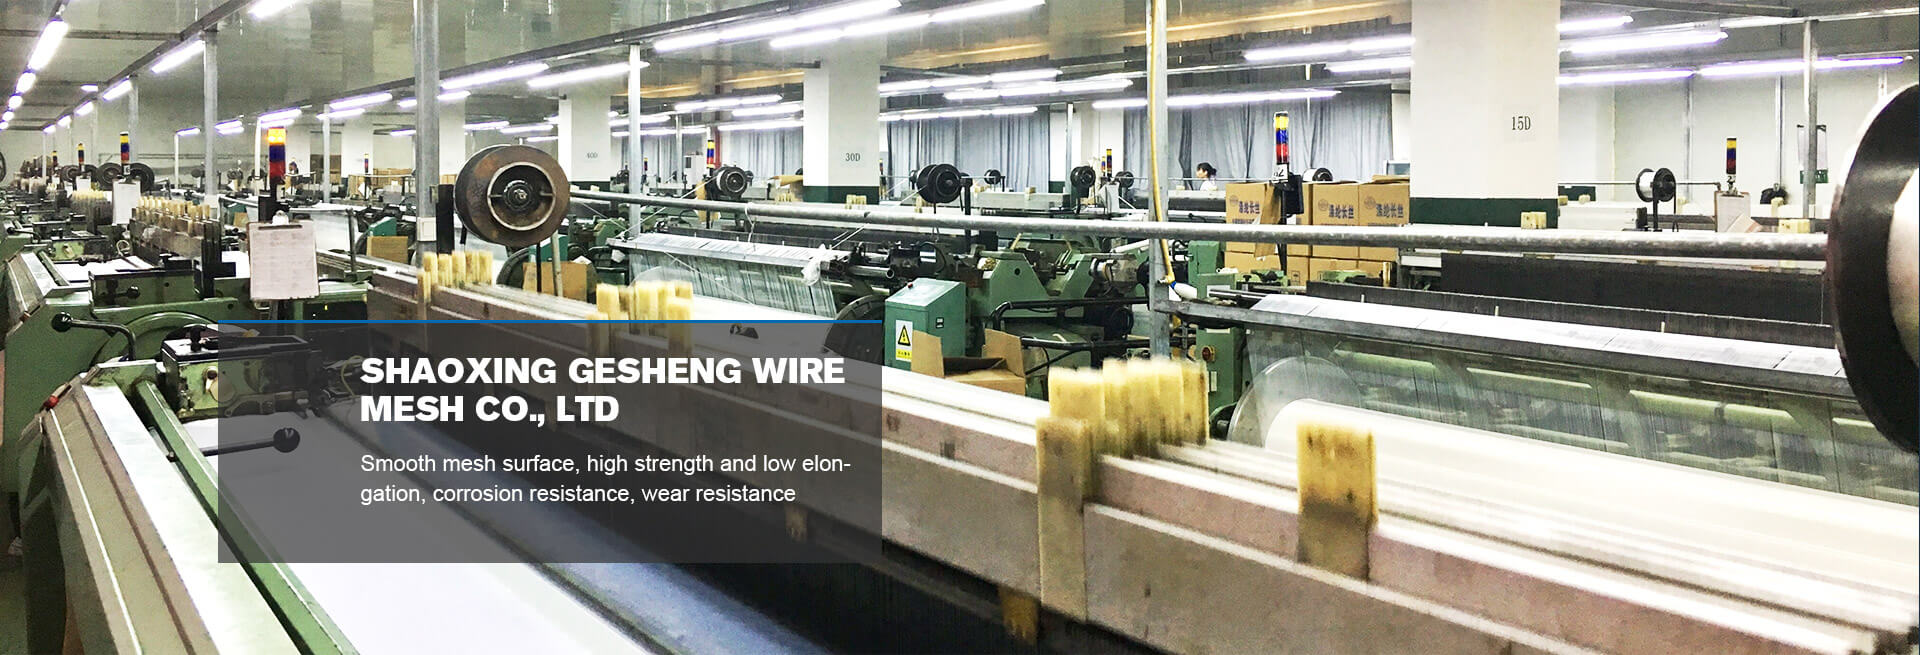 Shaoxing Gesheng Wire Mesh Co., Ltd.